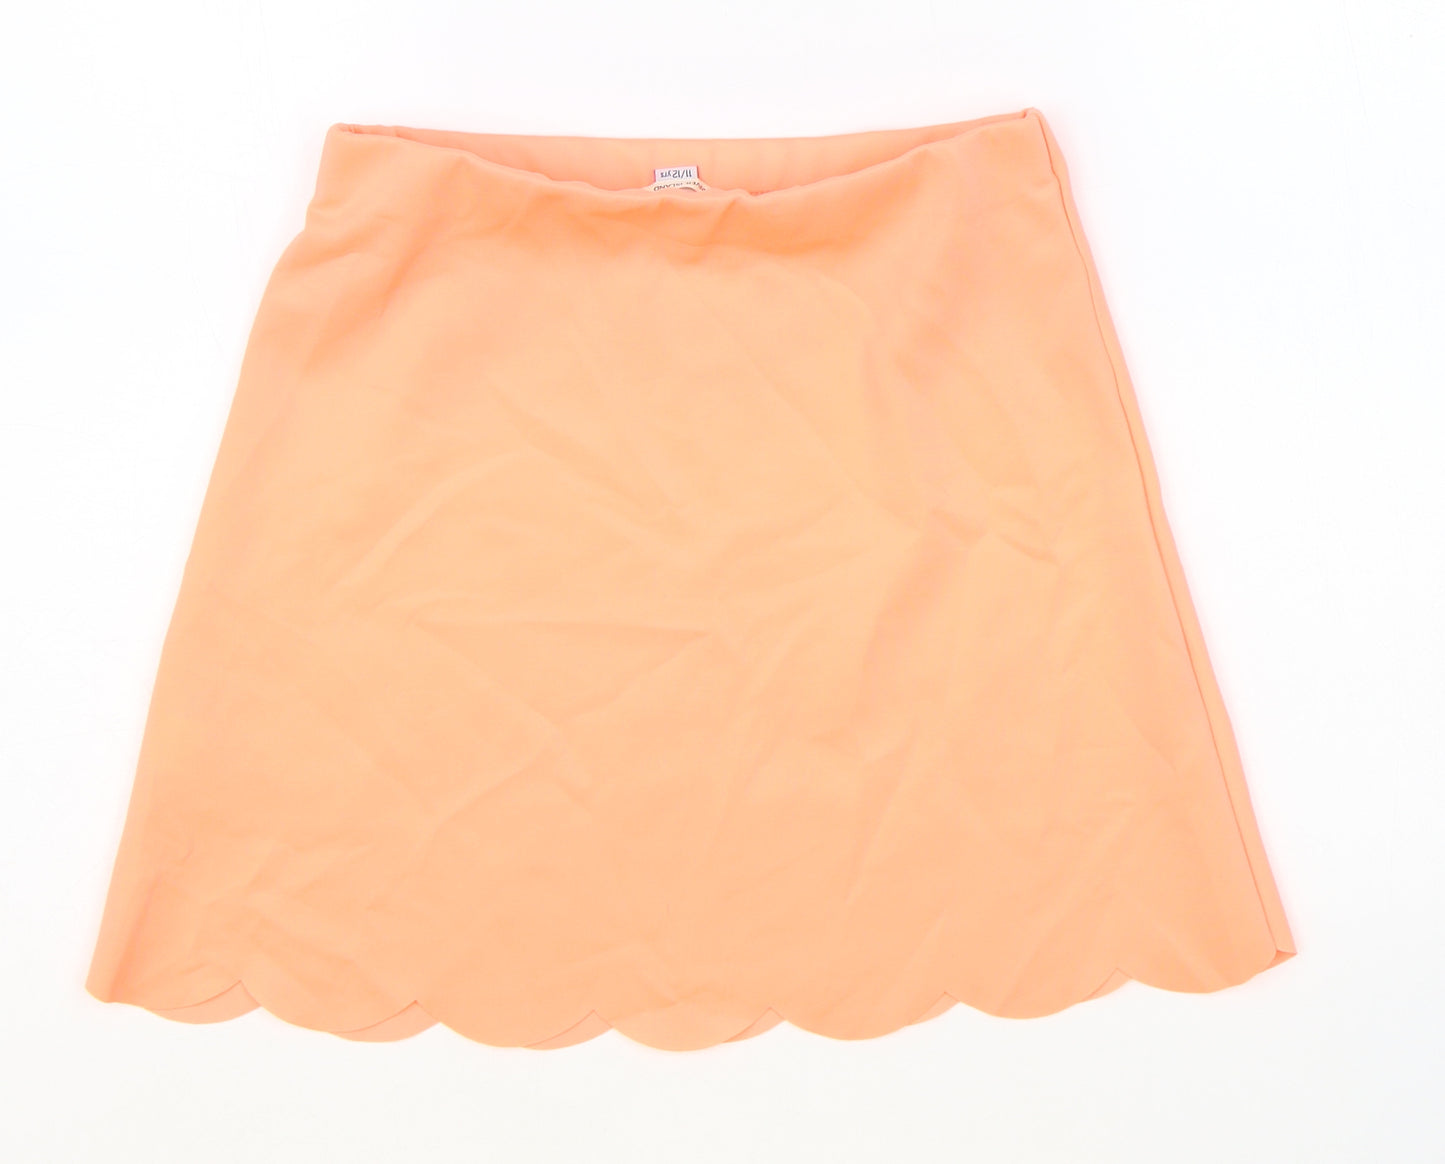 River Island Girls Orange Polyester A-Line Skirt Size 11-12 Years Regular Pull On - Scallop Hem